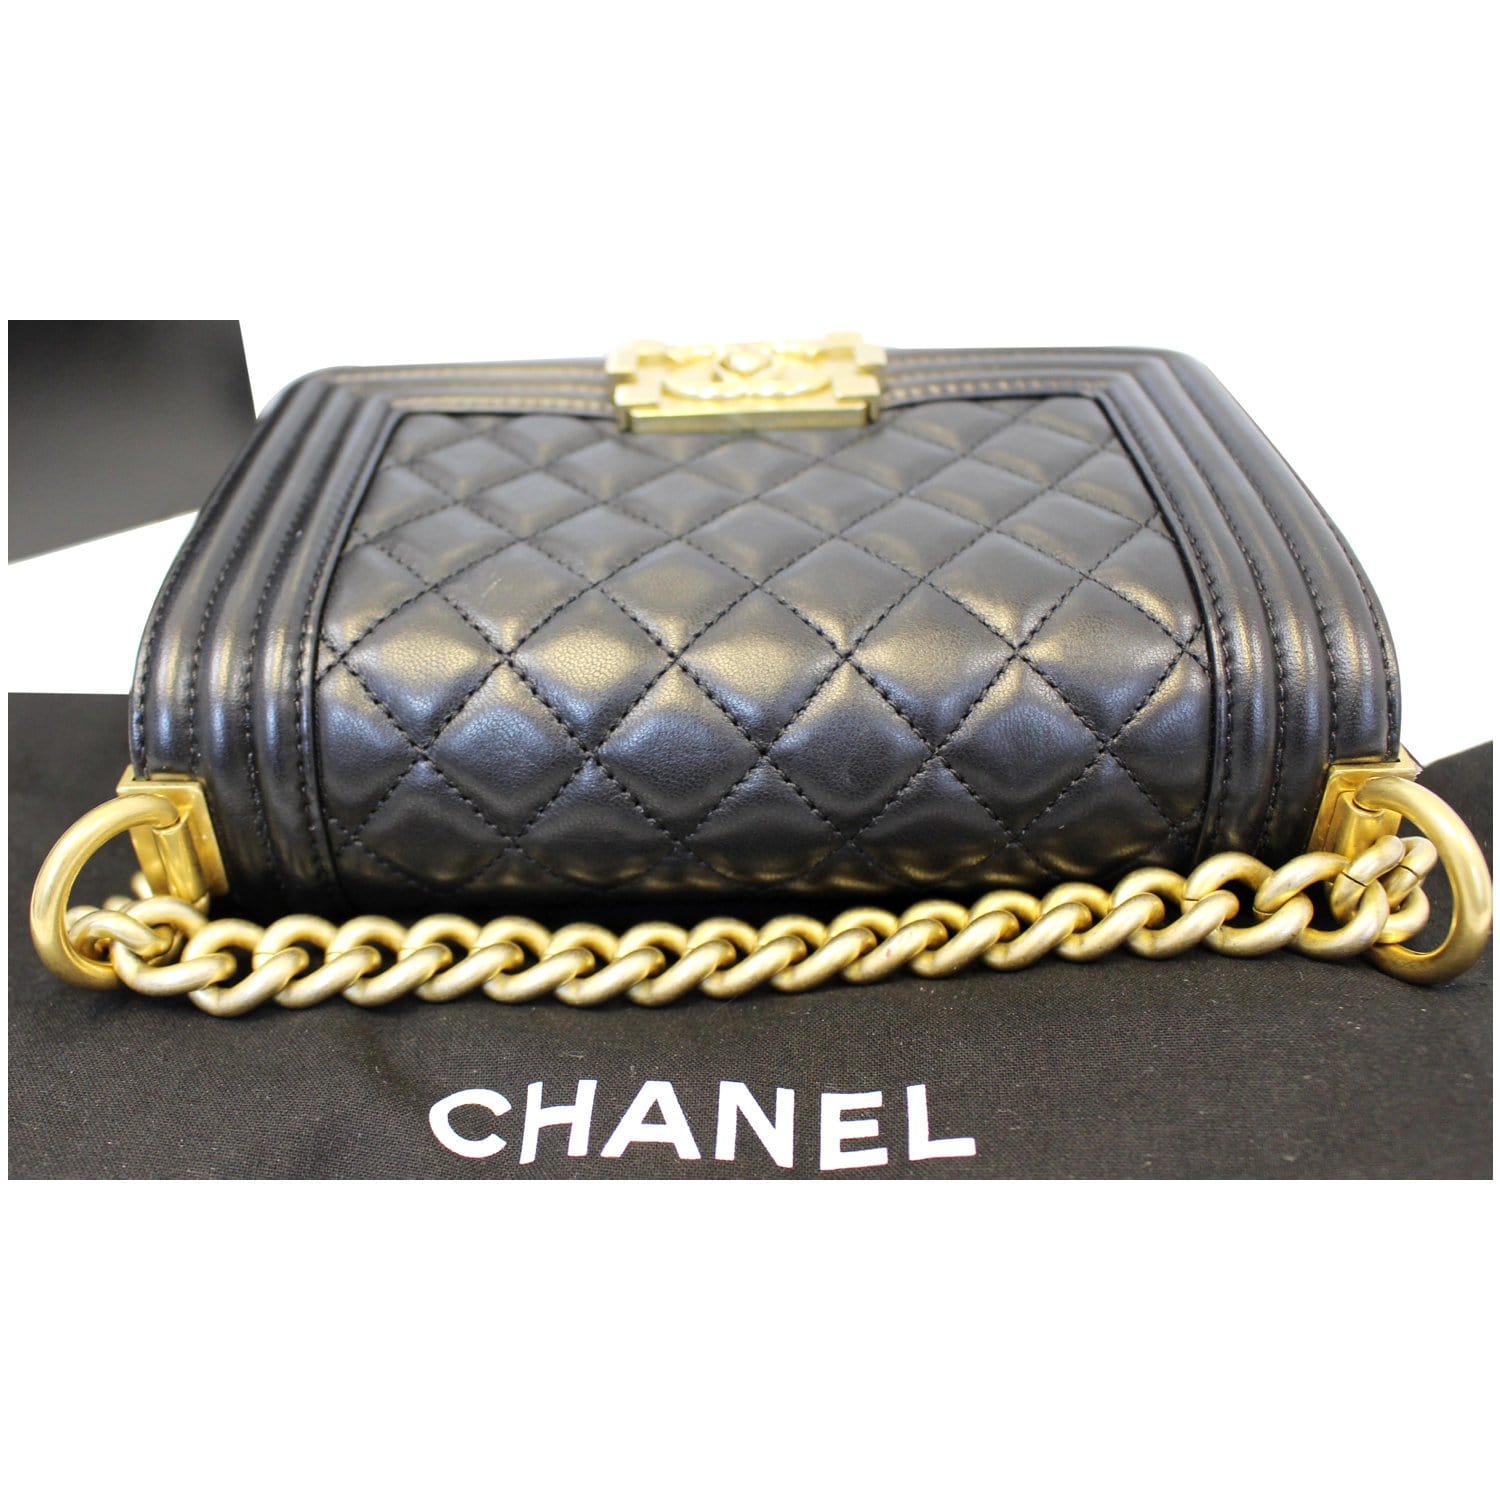 Chanel Le Boy Small Lambskin Leather Shoulder Bag